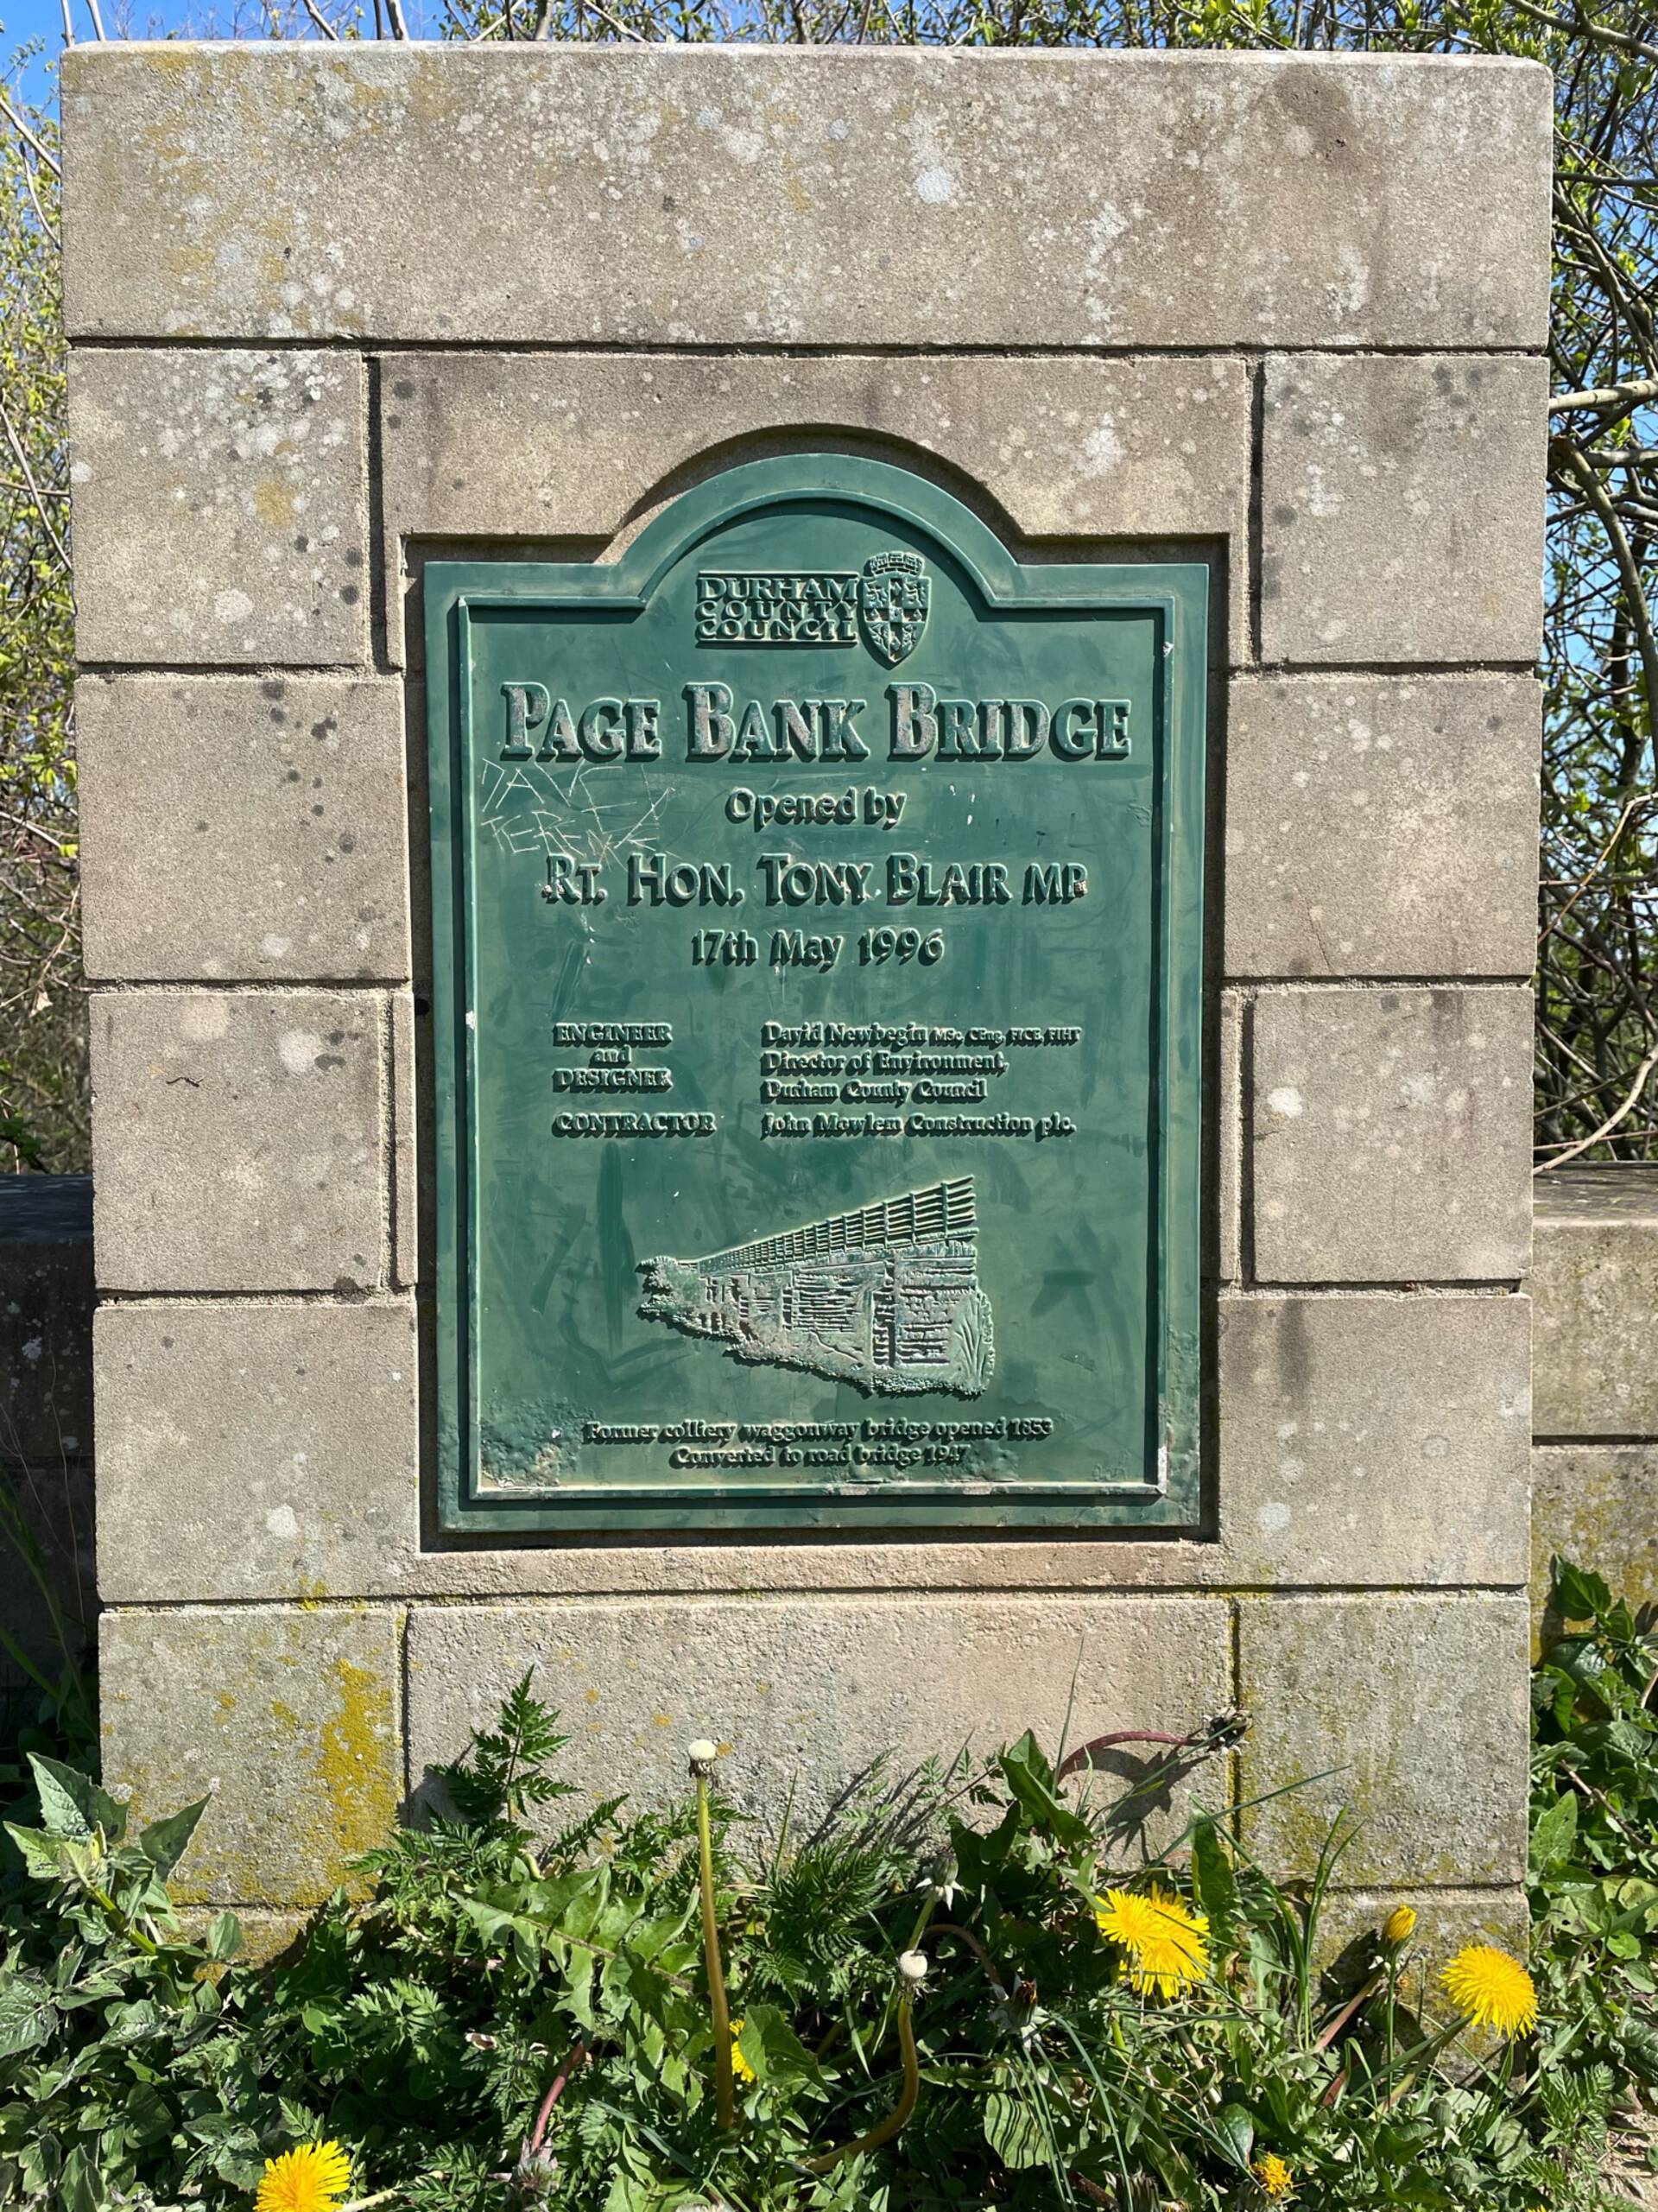 The commemorative plaque at Page Bank Bridge